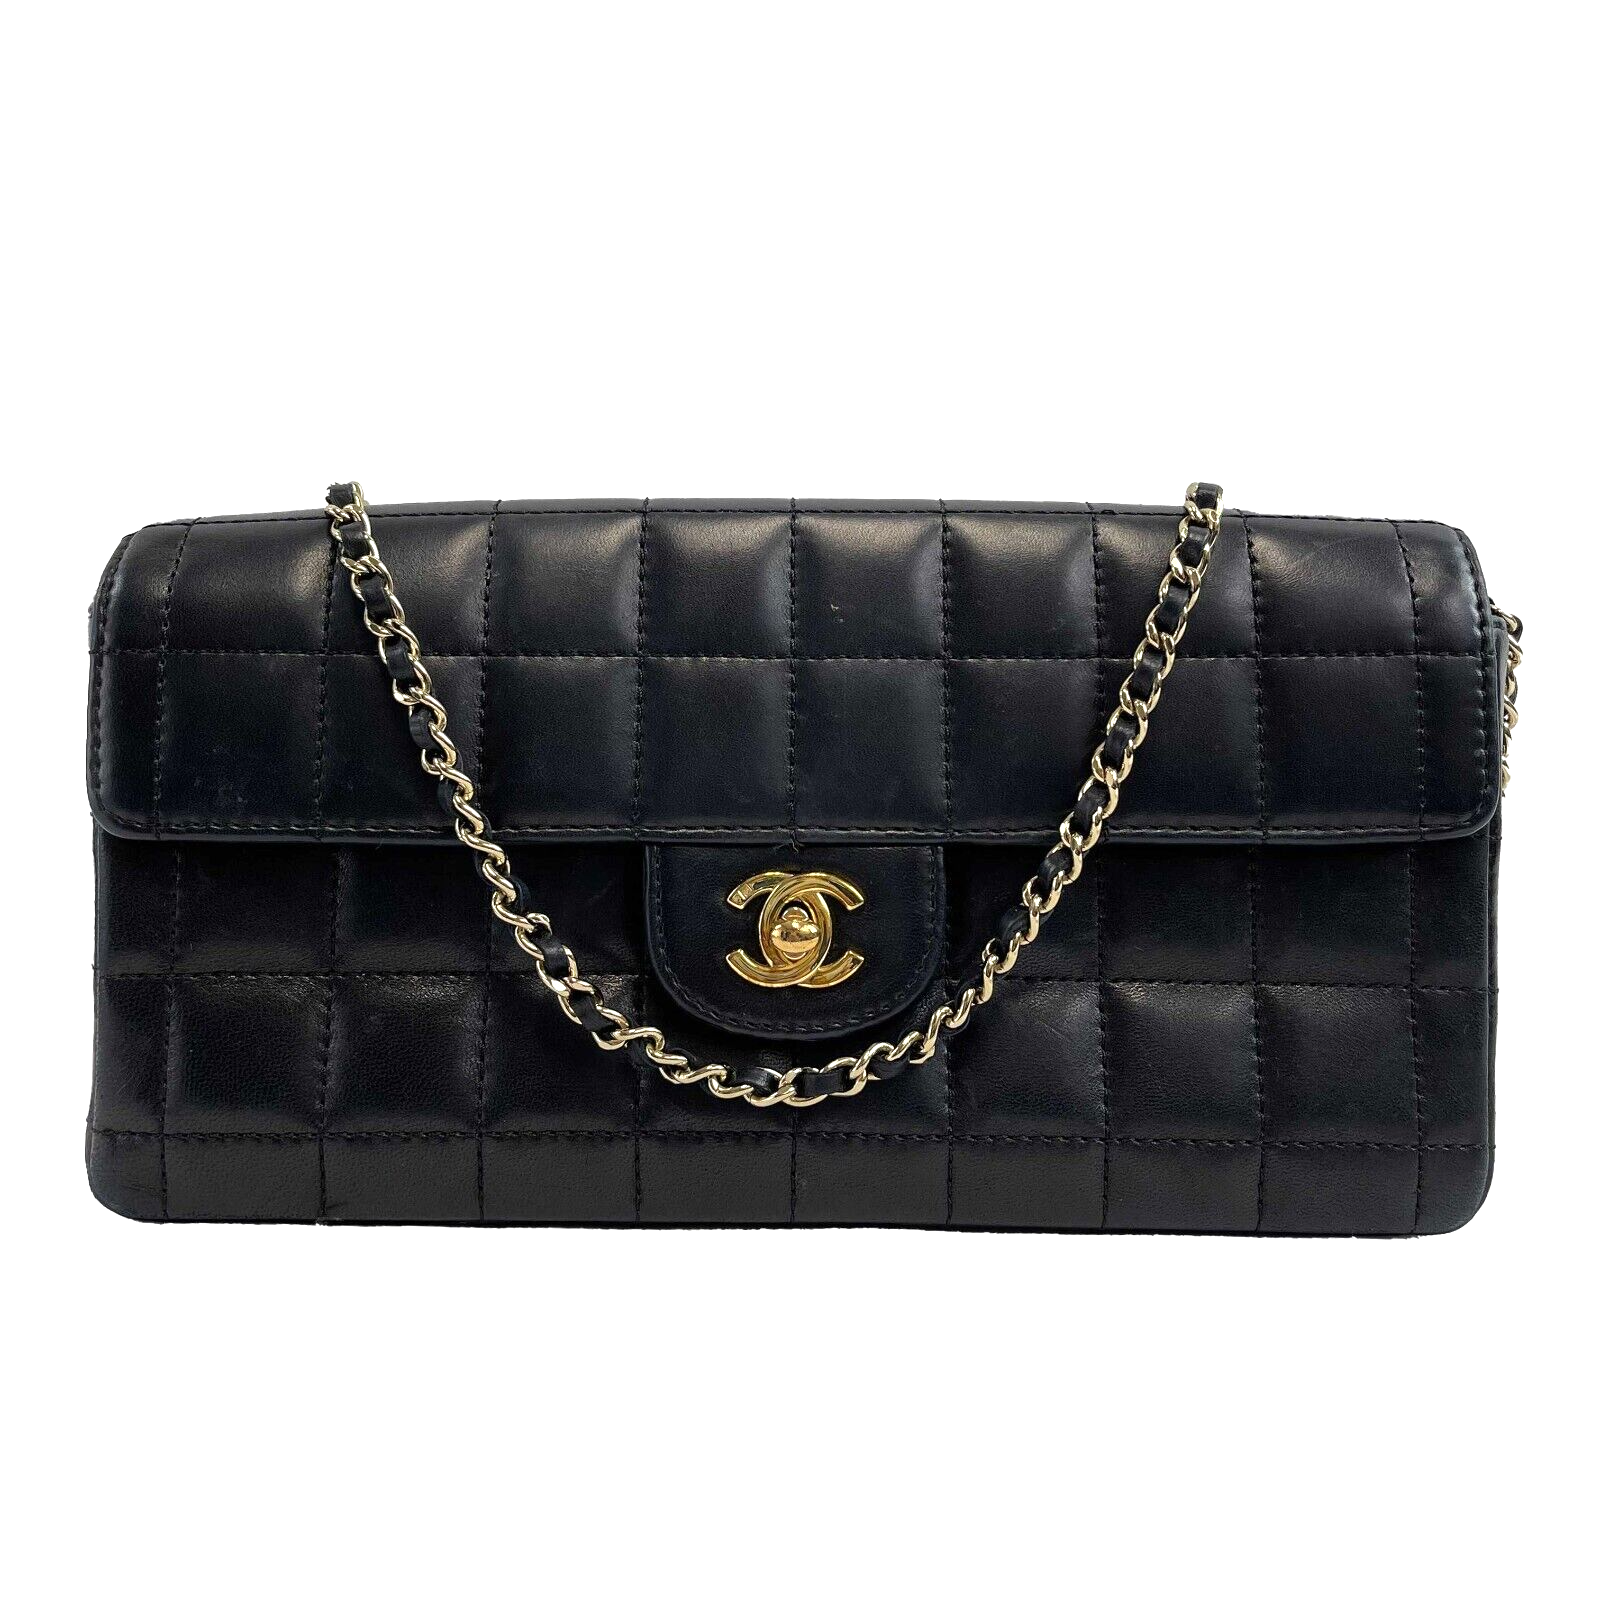 Chanel Black Vintage Chocolate Bar Bag East West Flap CC Gold Handbag